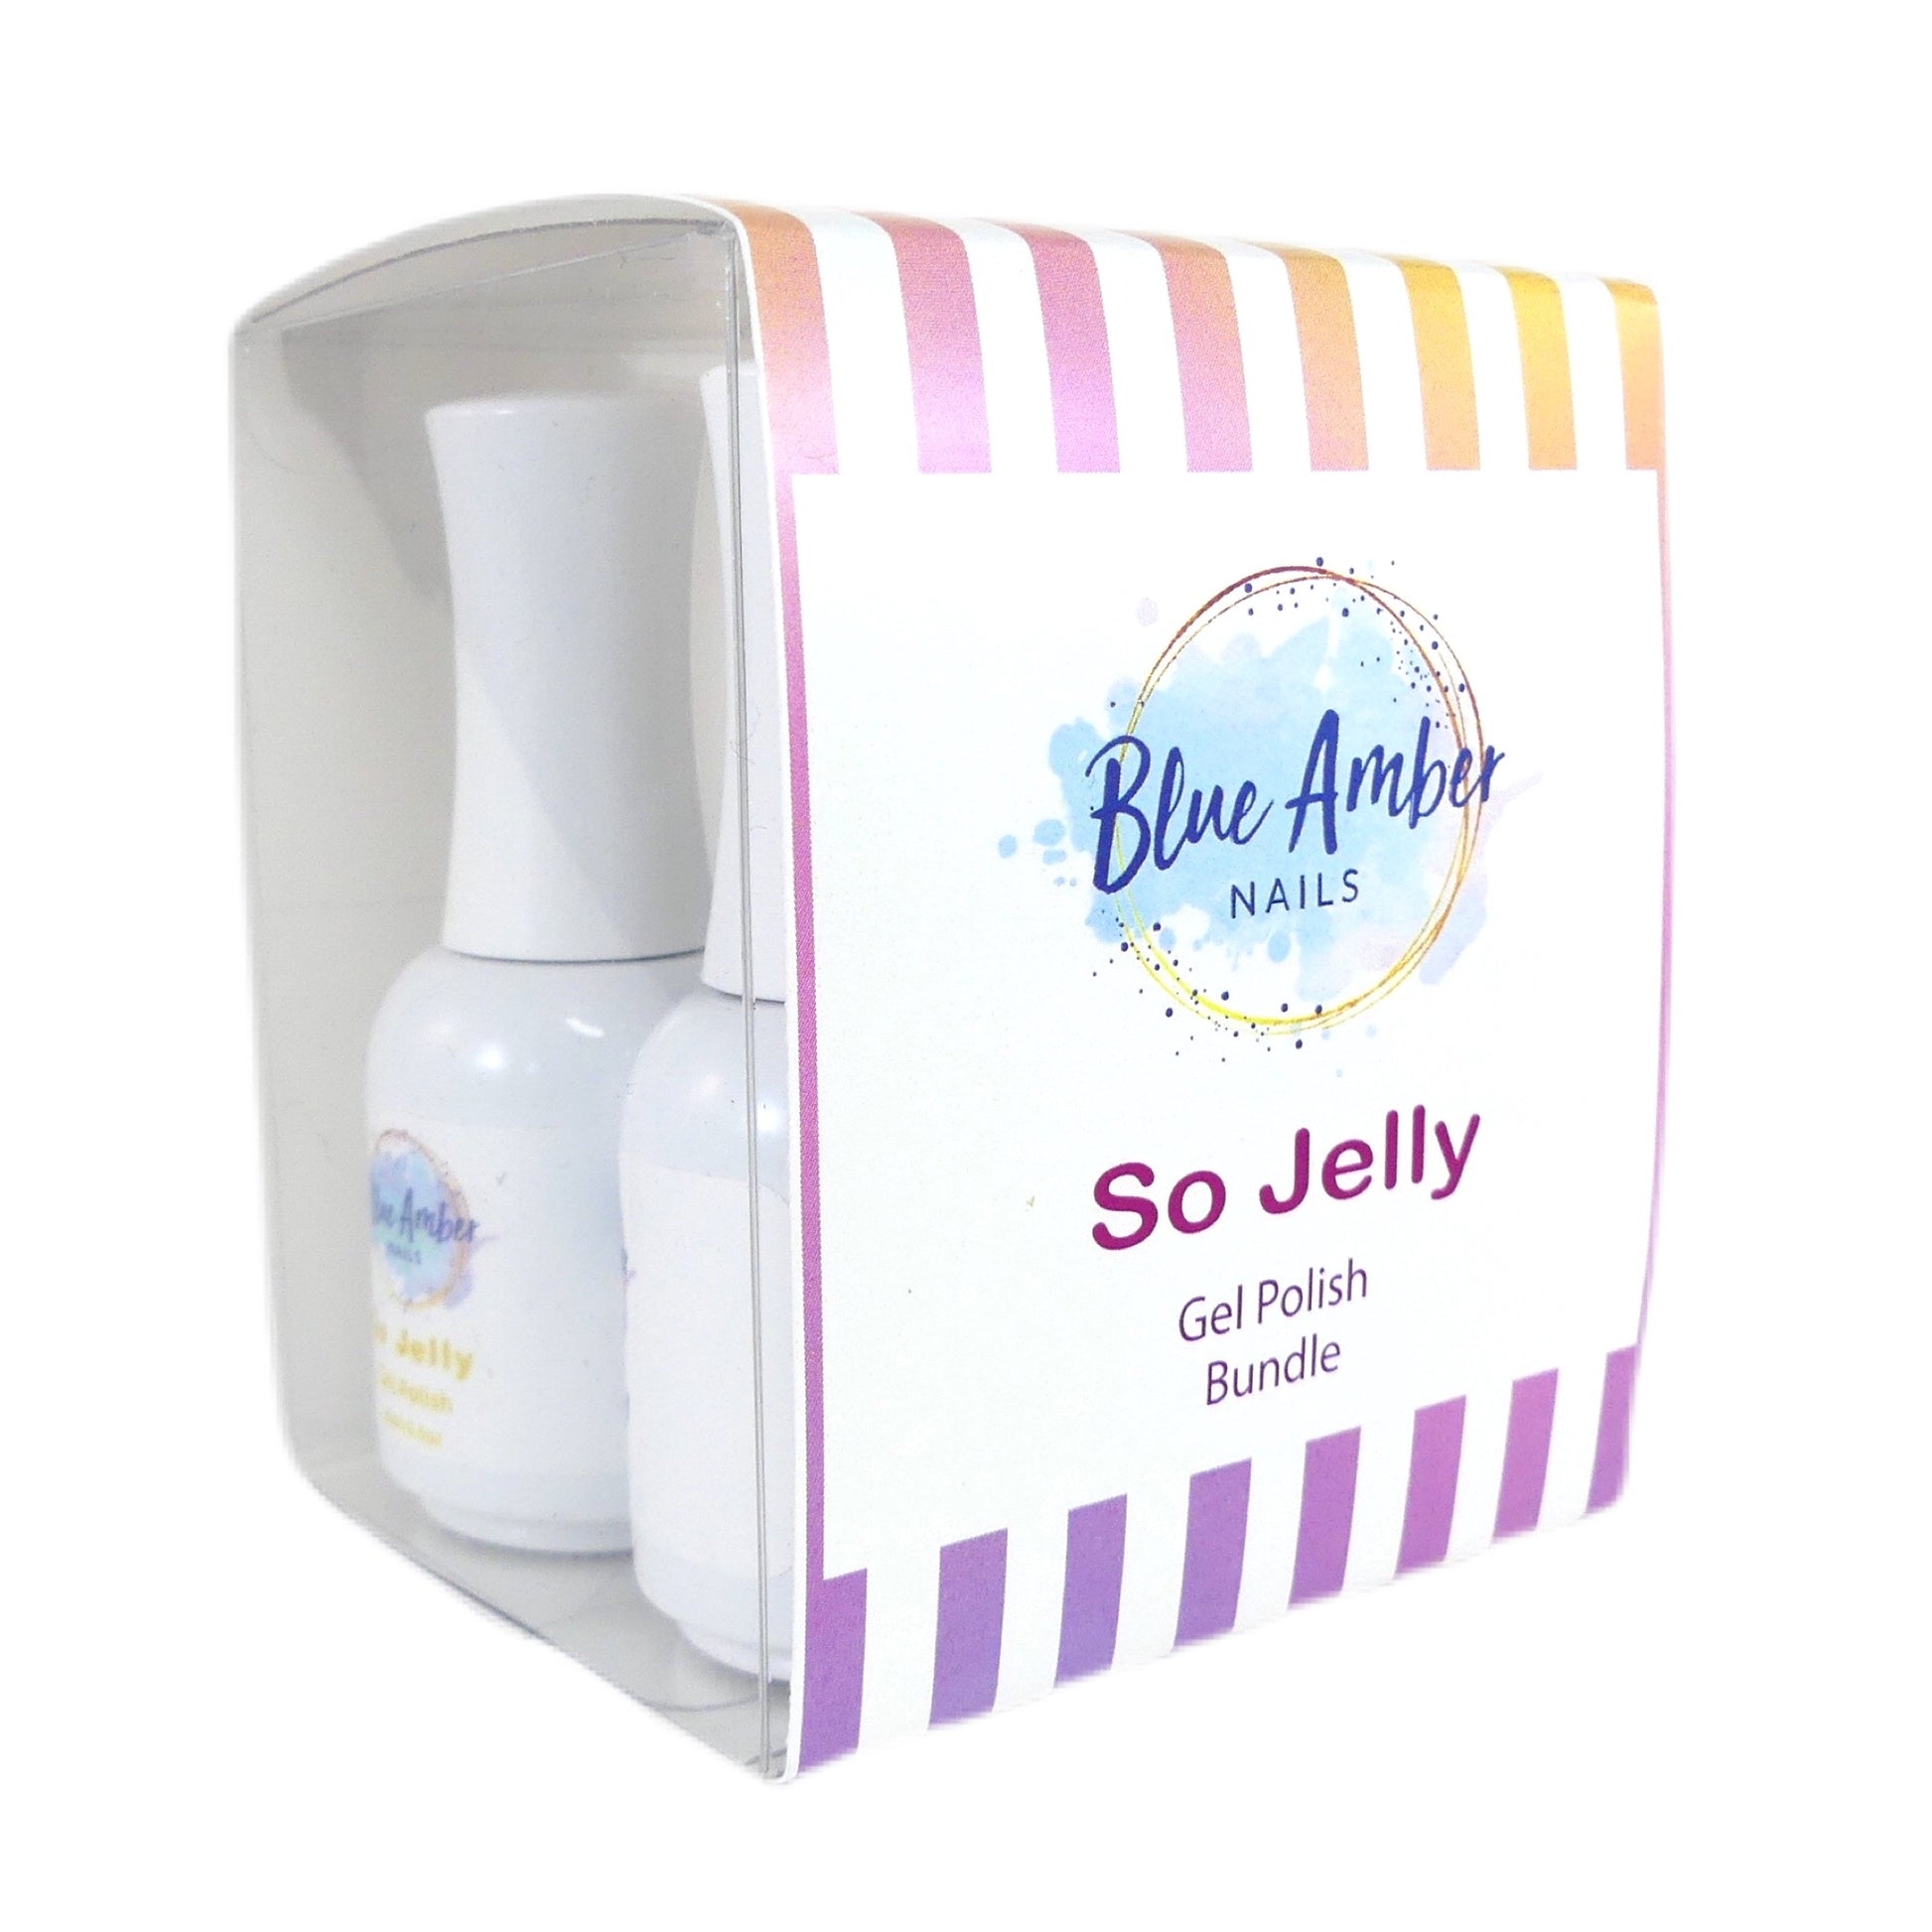 So Jelly Bundle - 4 Gel Polishes - My Little Nail Art Shop